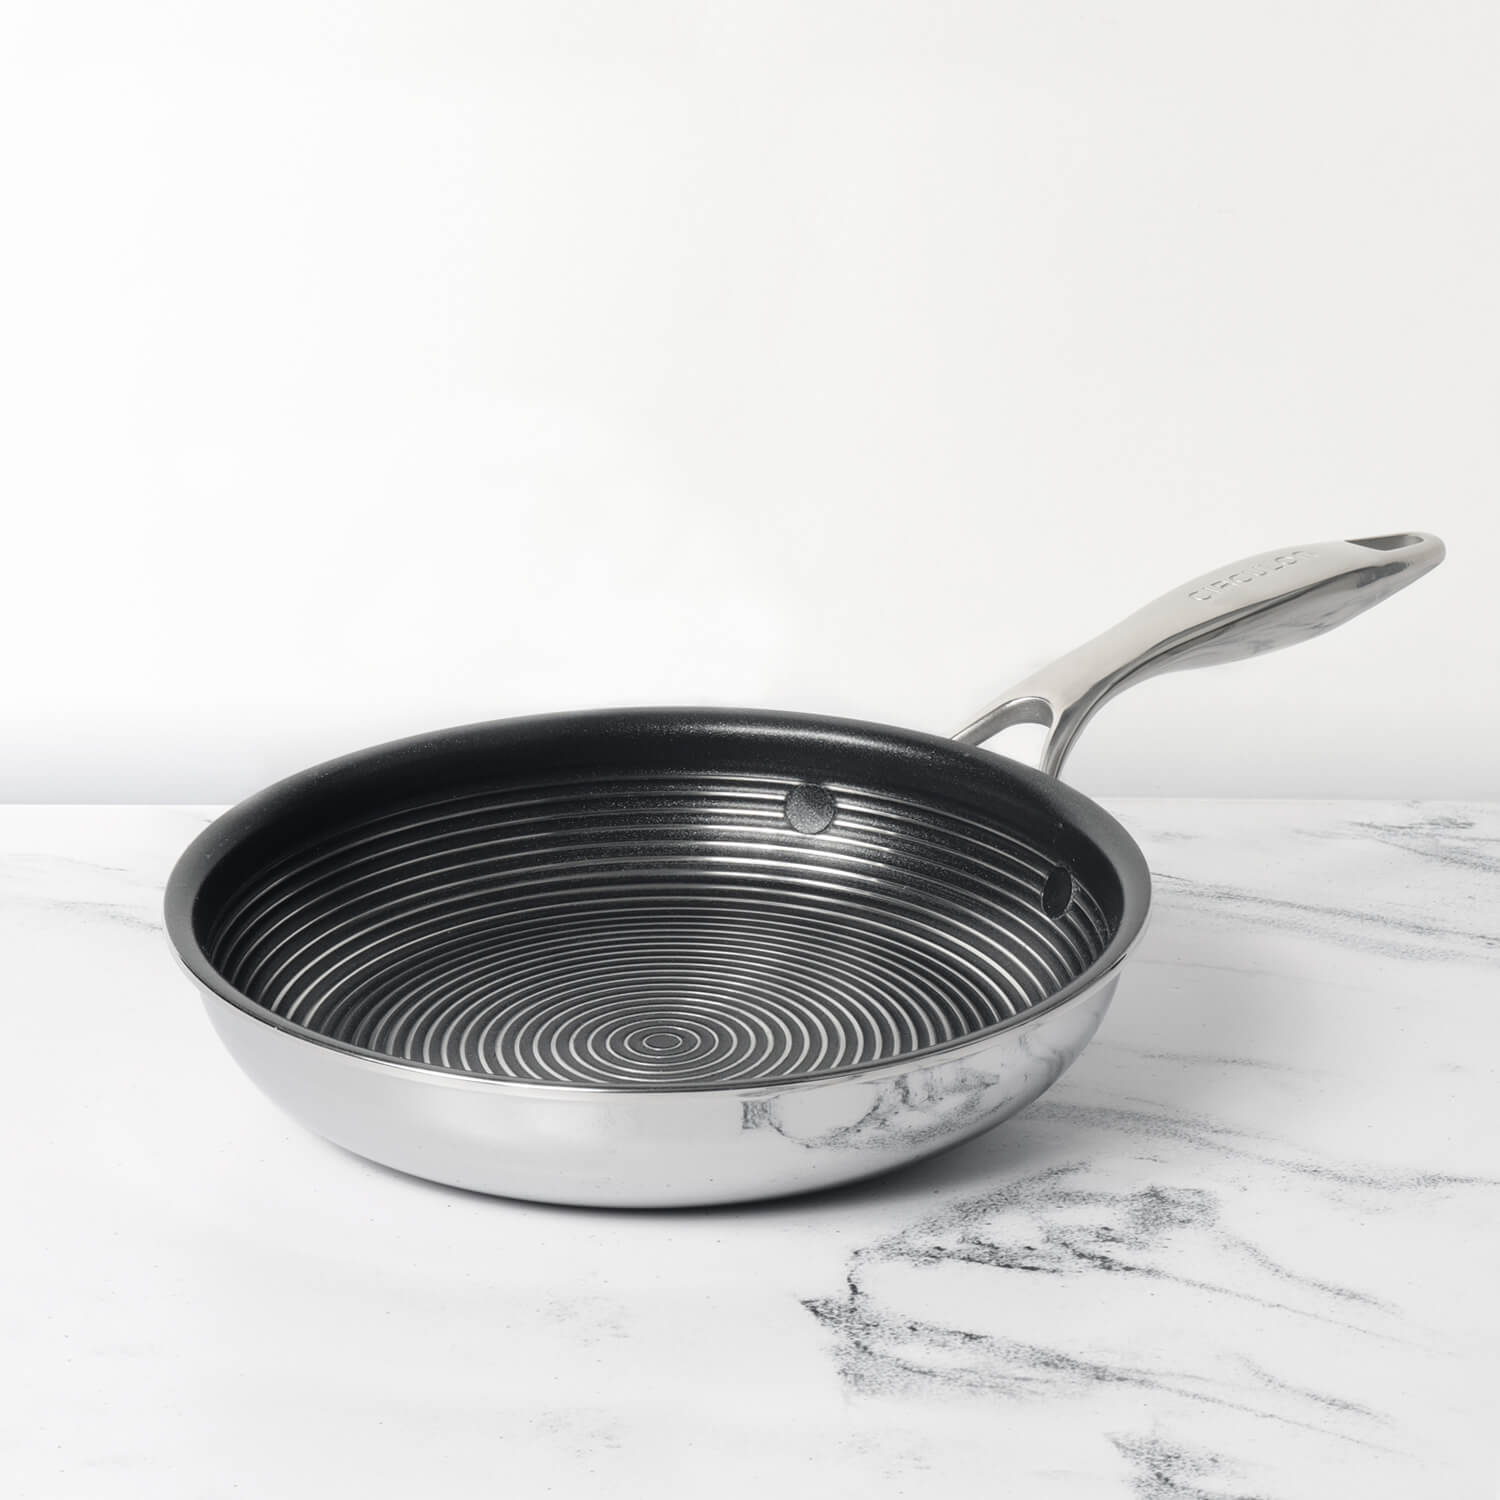 Circulon Style Non Stick Frying Pan 25cm - Induction Frying Pan